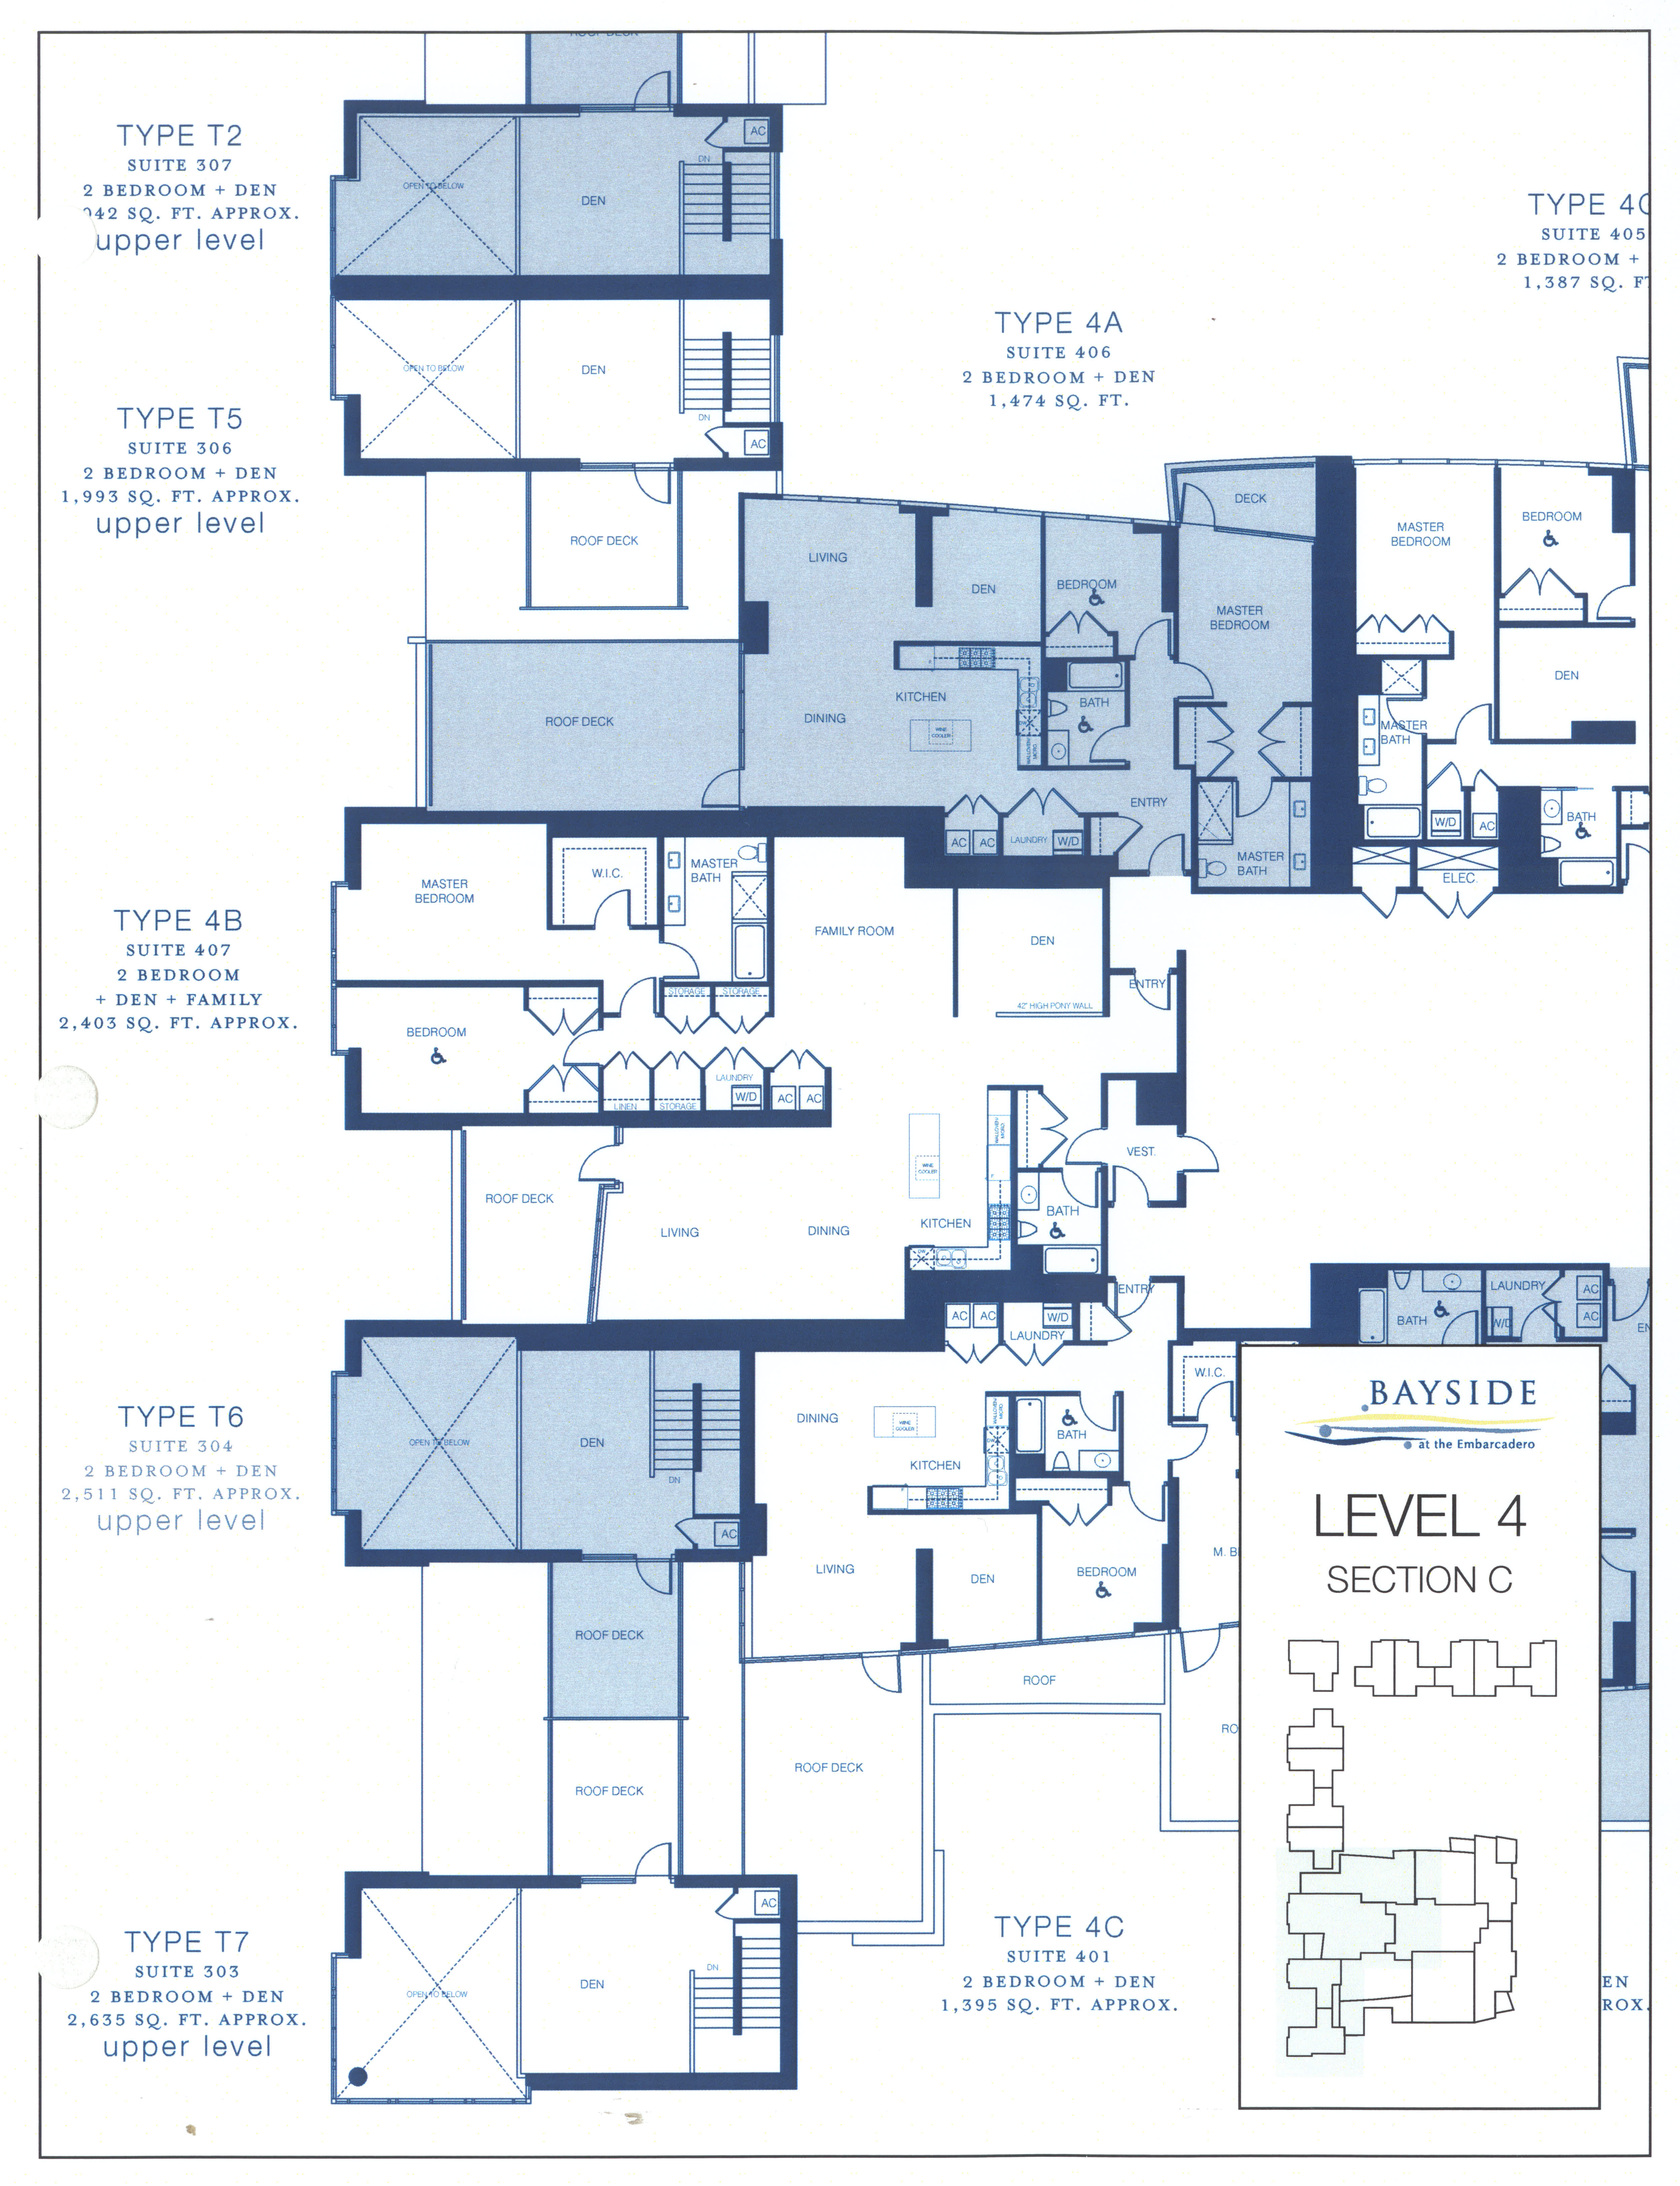 Bayside Floor Plan Level 4 Section C